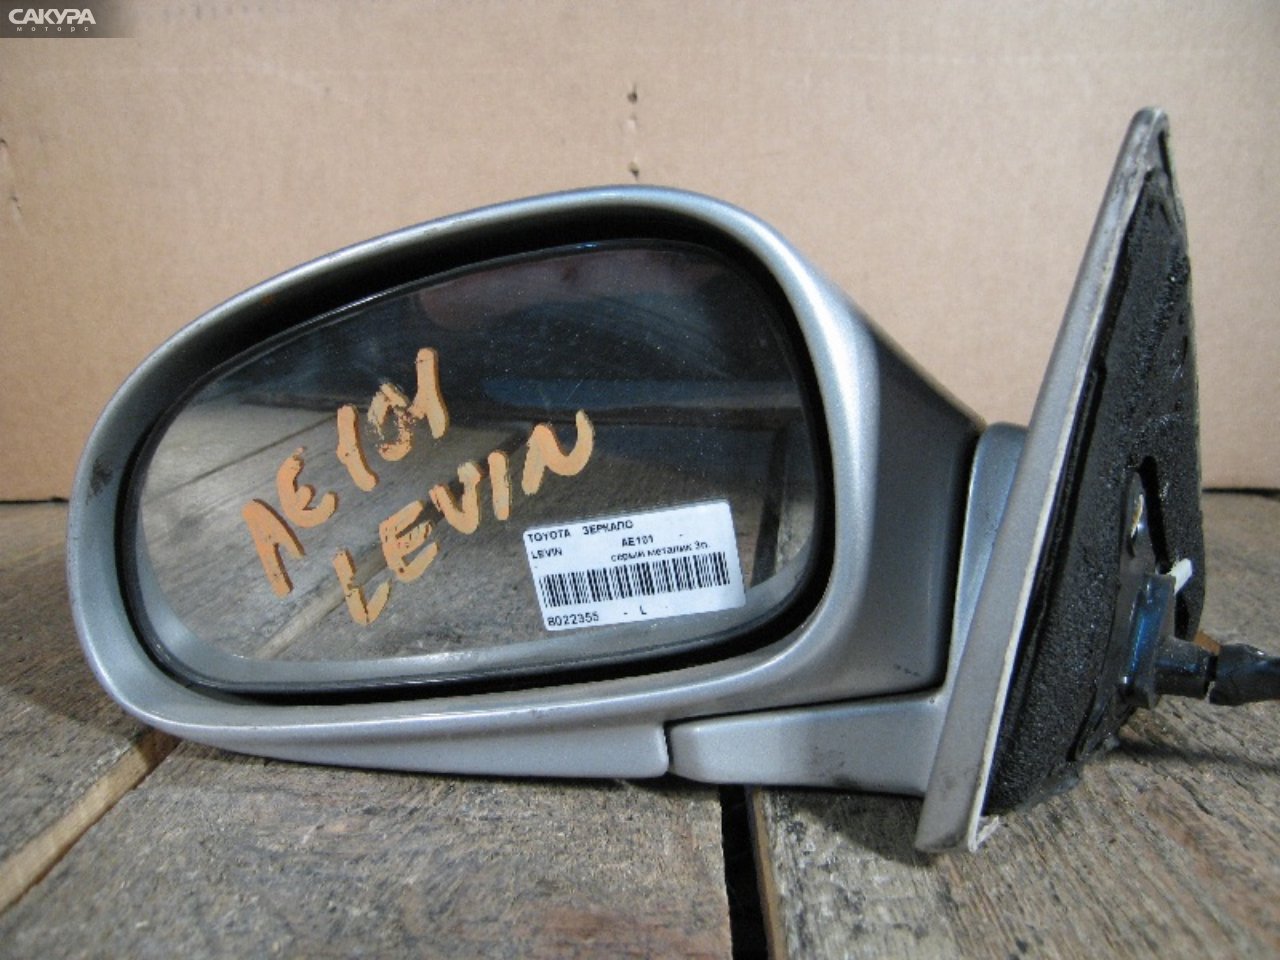 Зеркало боковое левое Toyota Corolla Levin AE101: купить в Сакура Абакан.